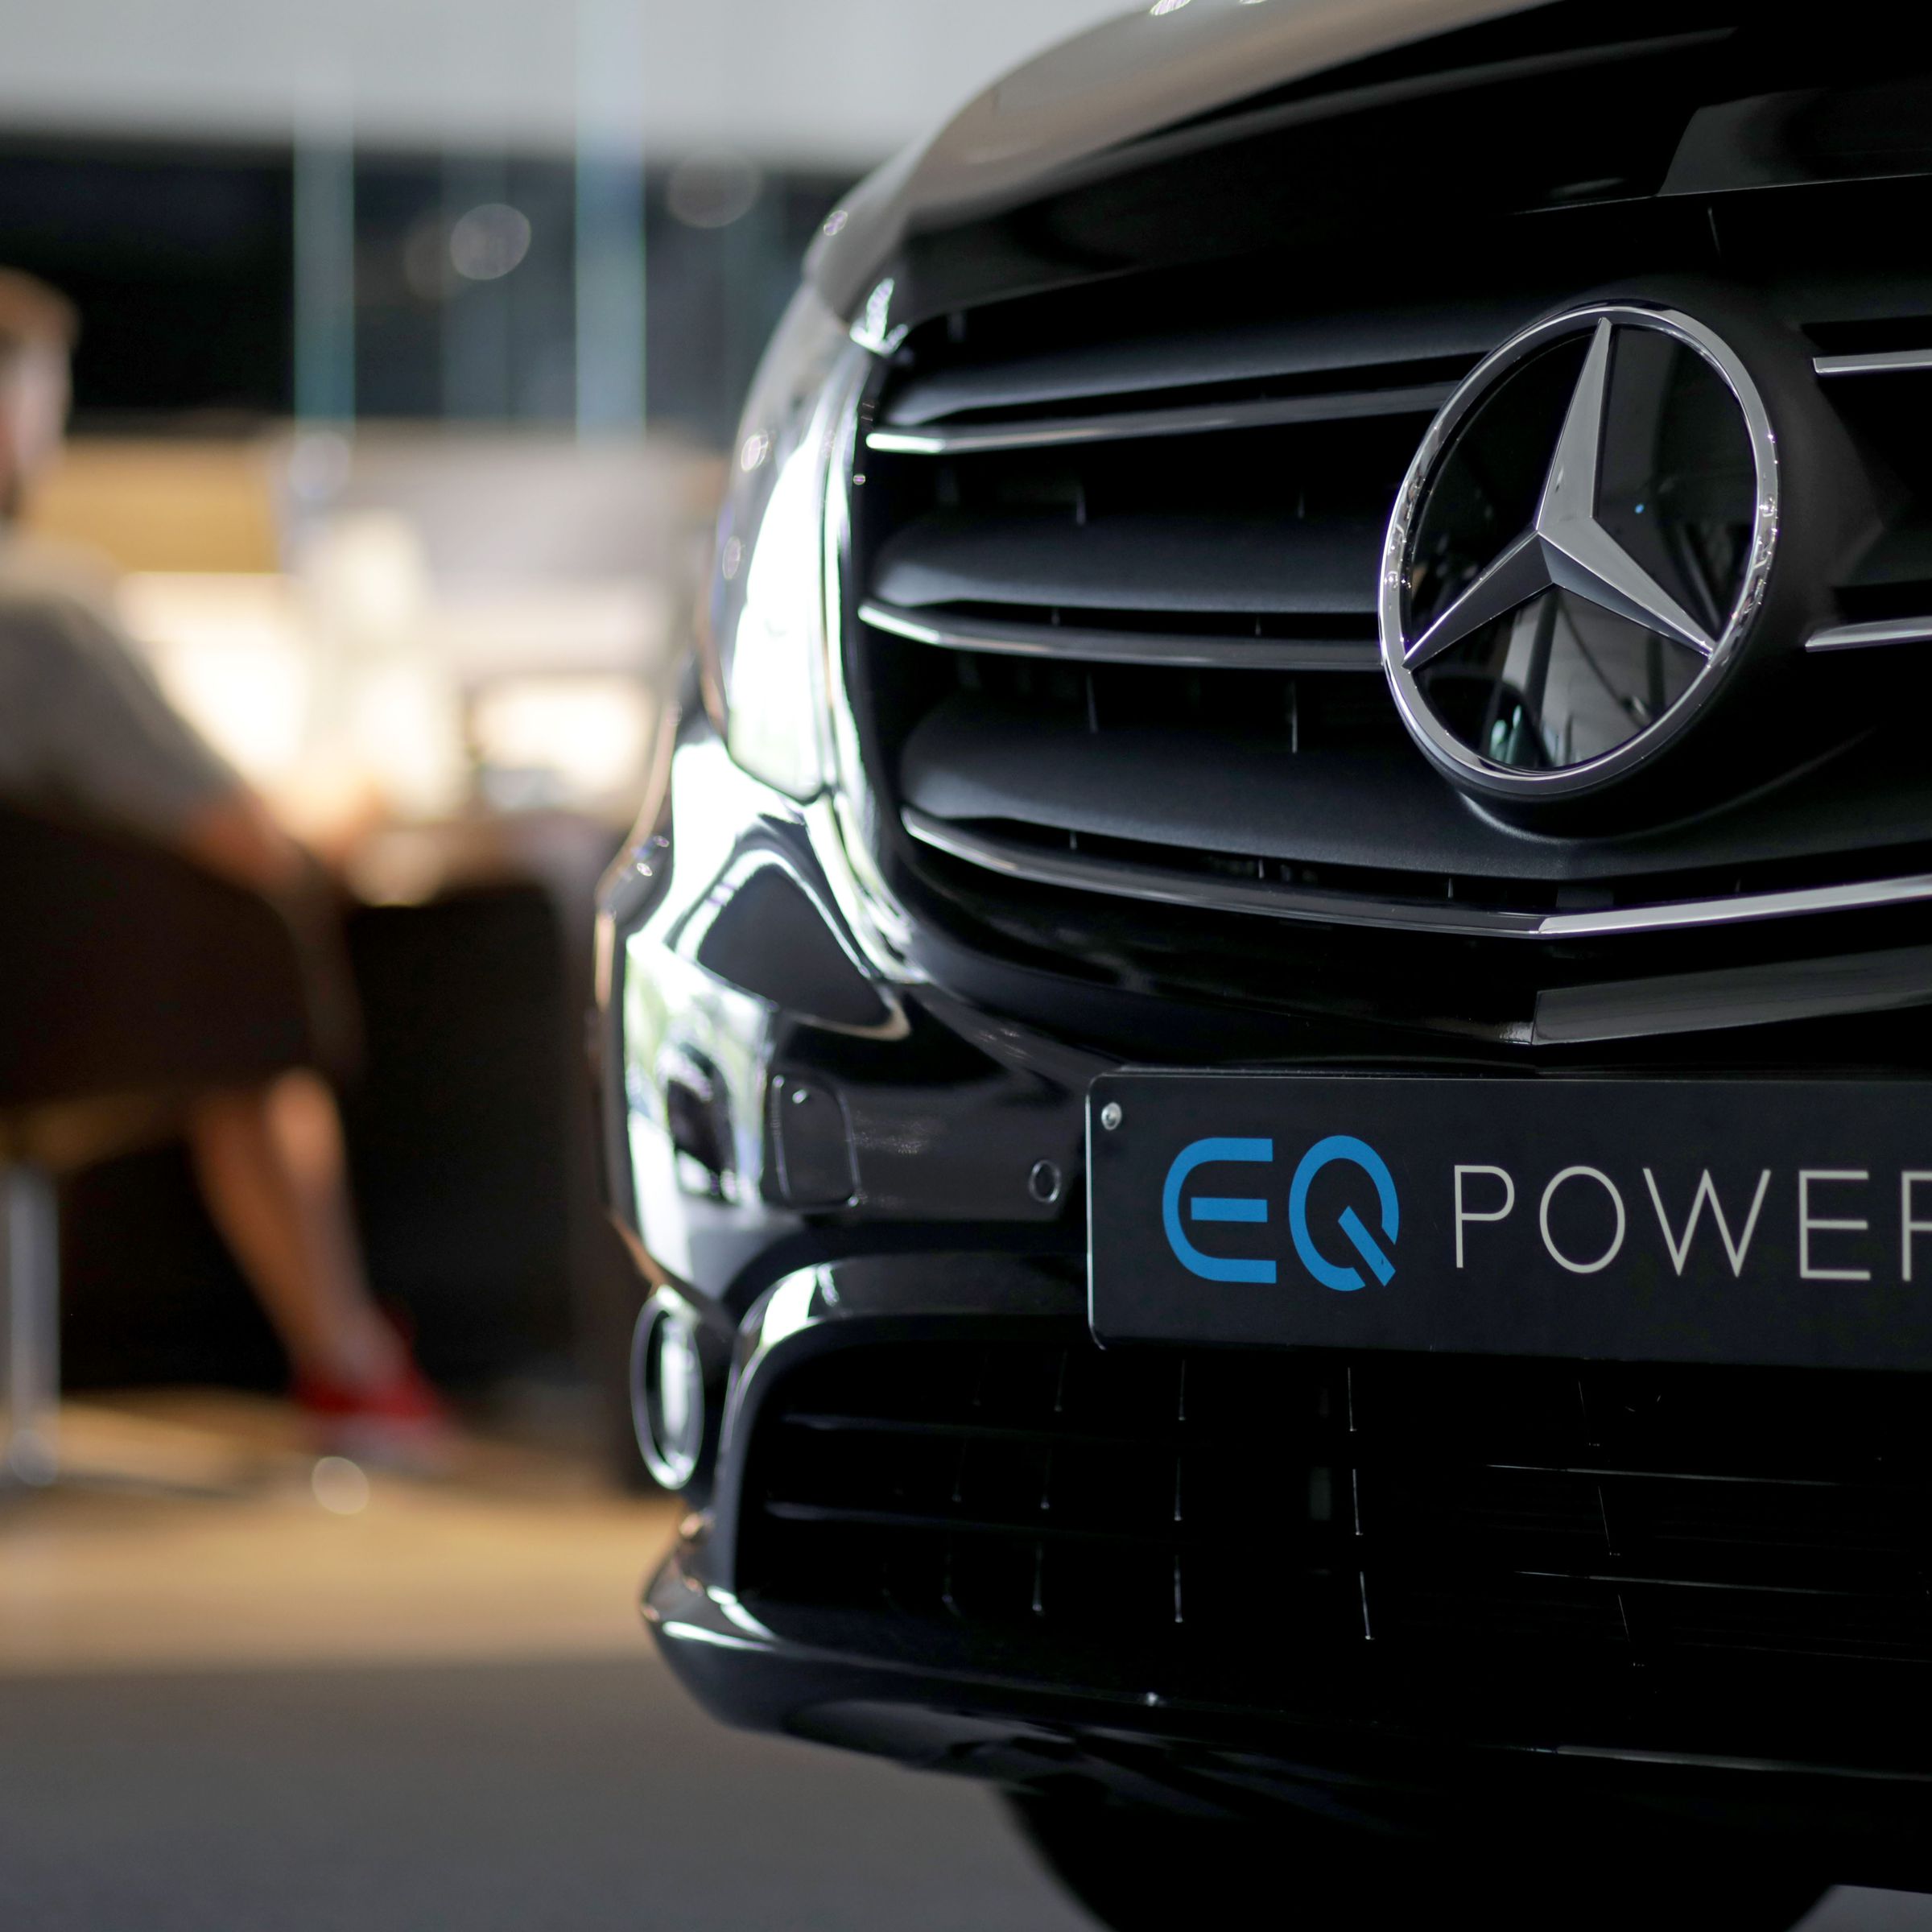 Mercedes-Benz AG Auto Showroom Ahead of Earnings